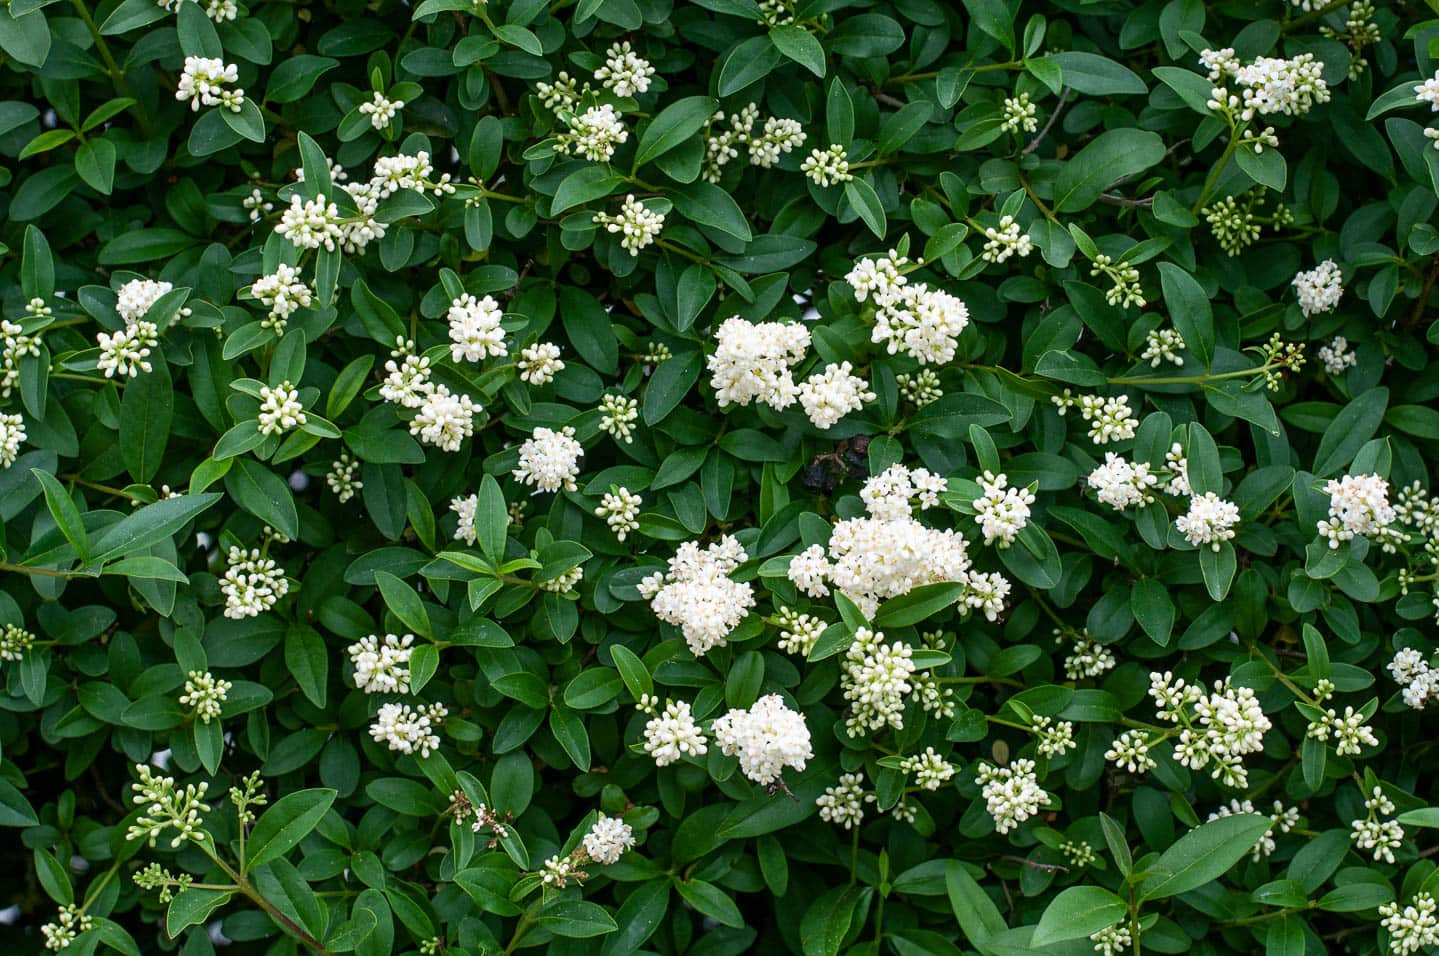 Privet shrub with white flowers